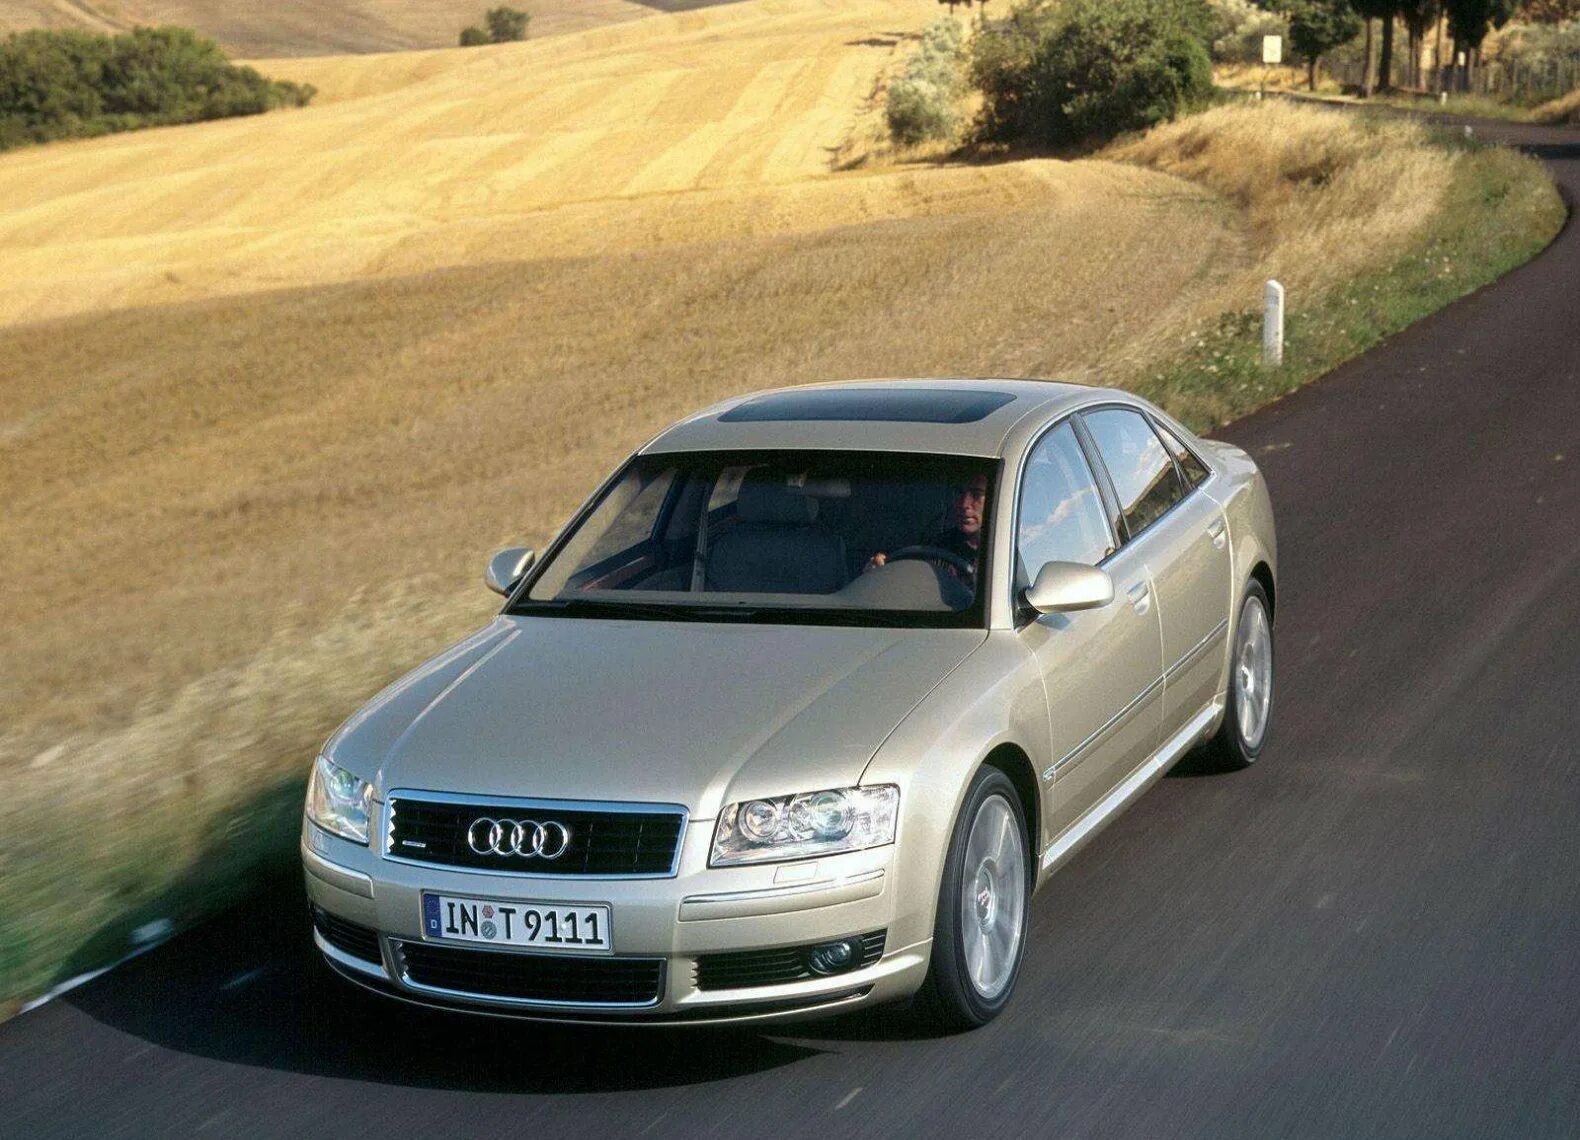 Ауди а8 3.3. Audi a8 2003. Audi a8 d3 2002. Audi a8 d3 2003. Ауди а8 кватро.